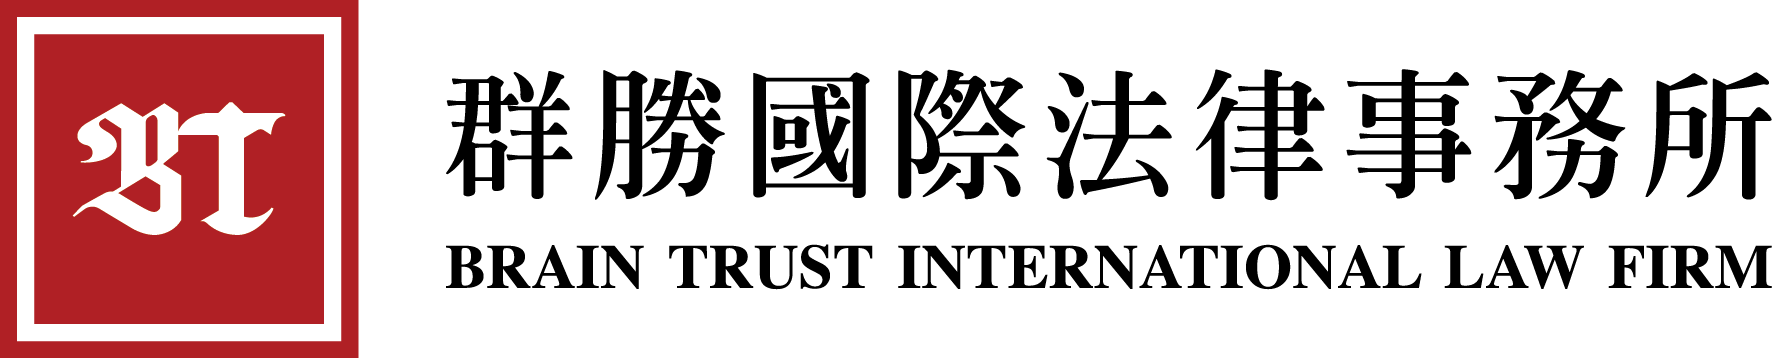 Brain Trust International Law Firm logo